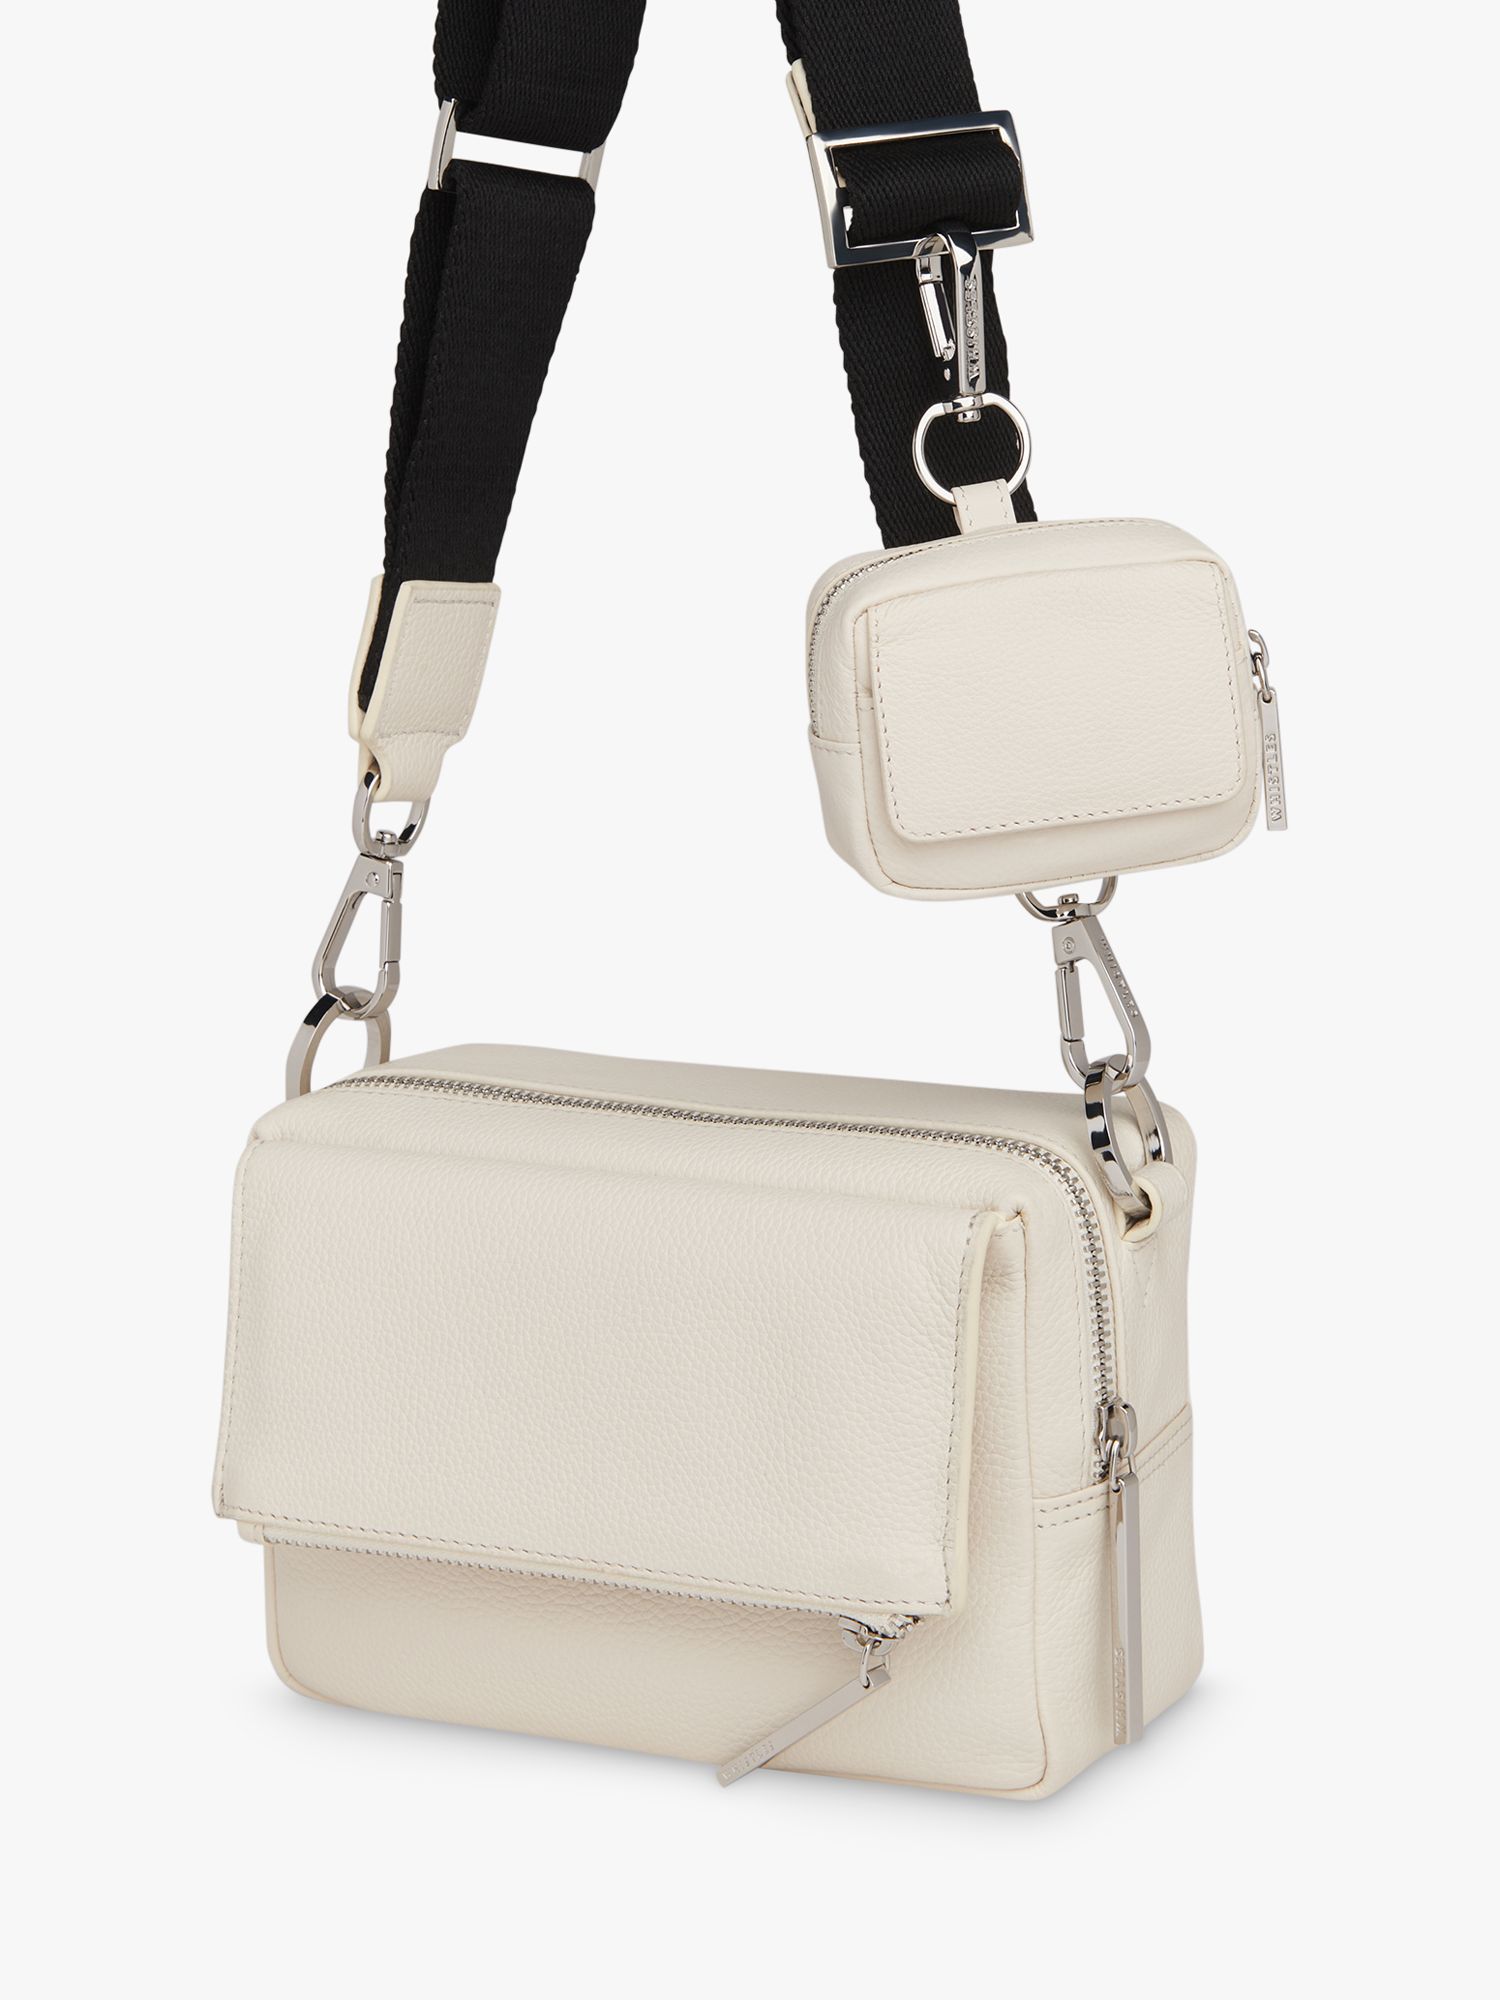 Whistles Bibi Mini Keyring Bag, White, One Size